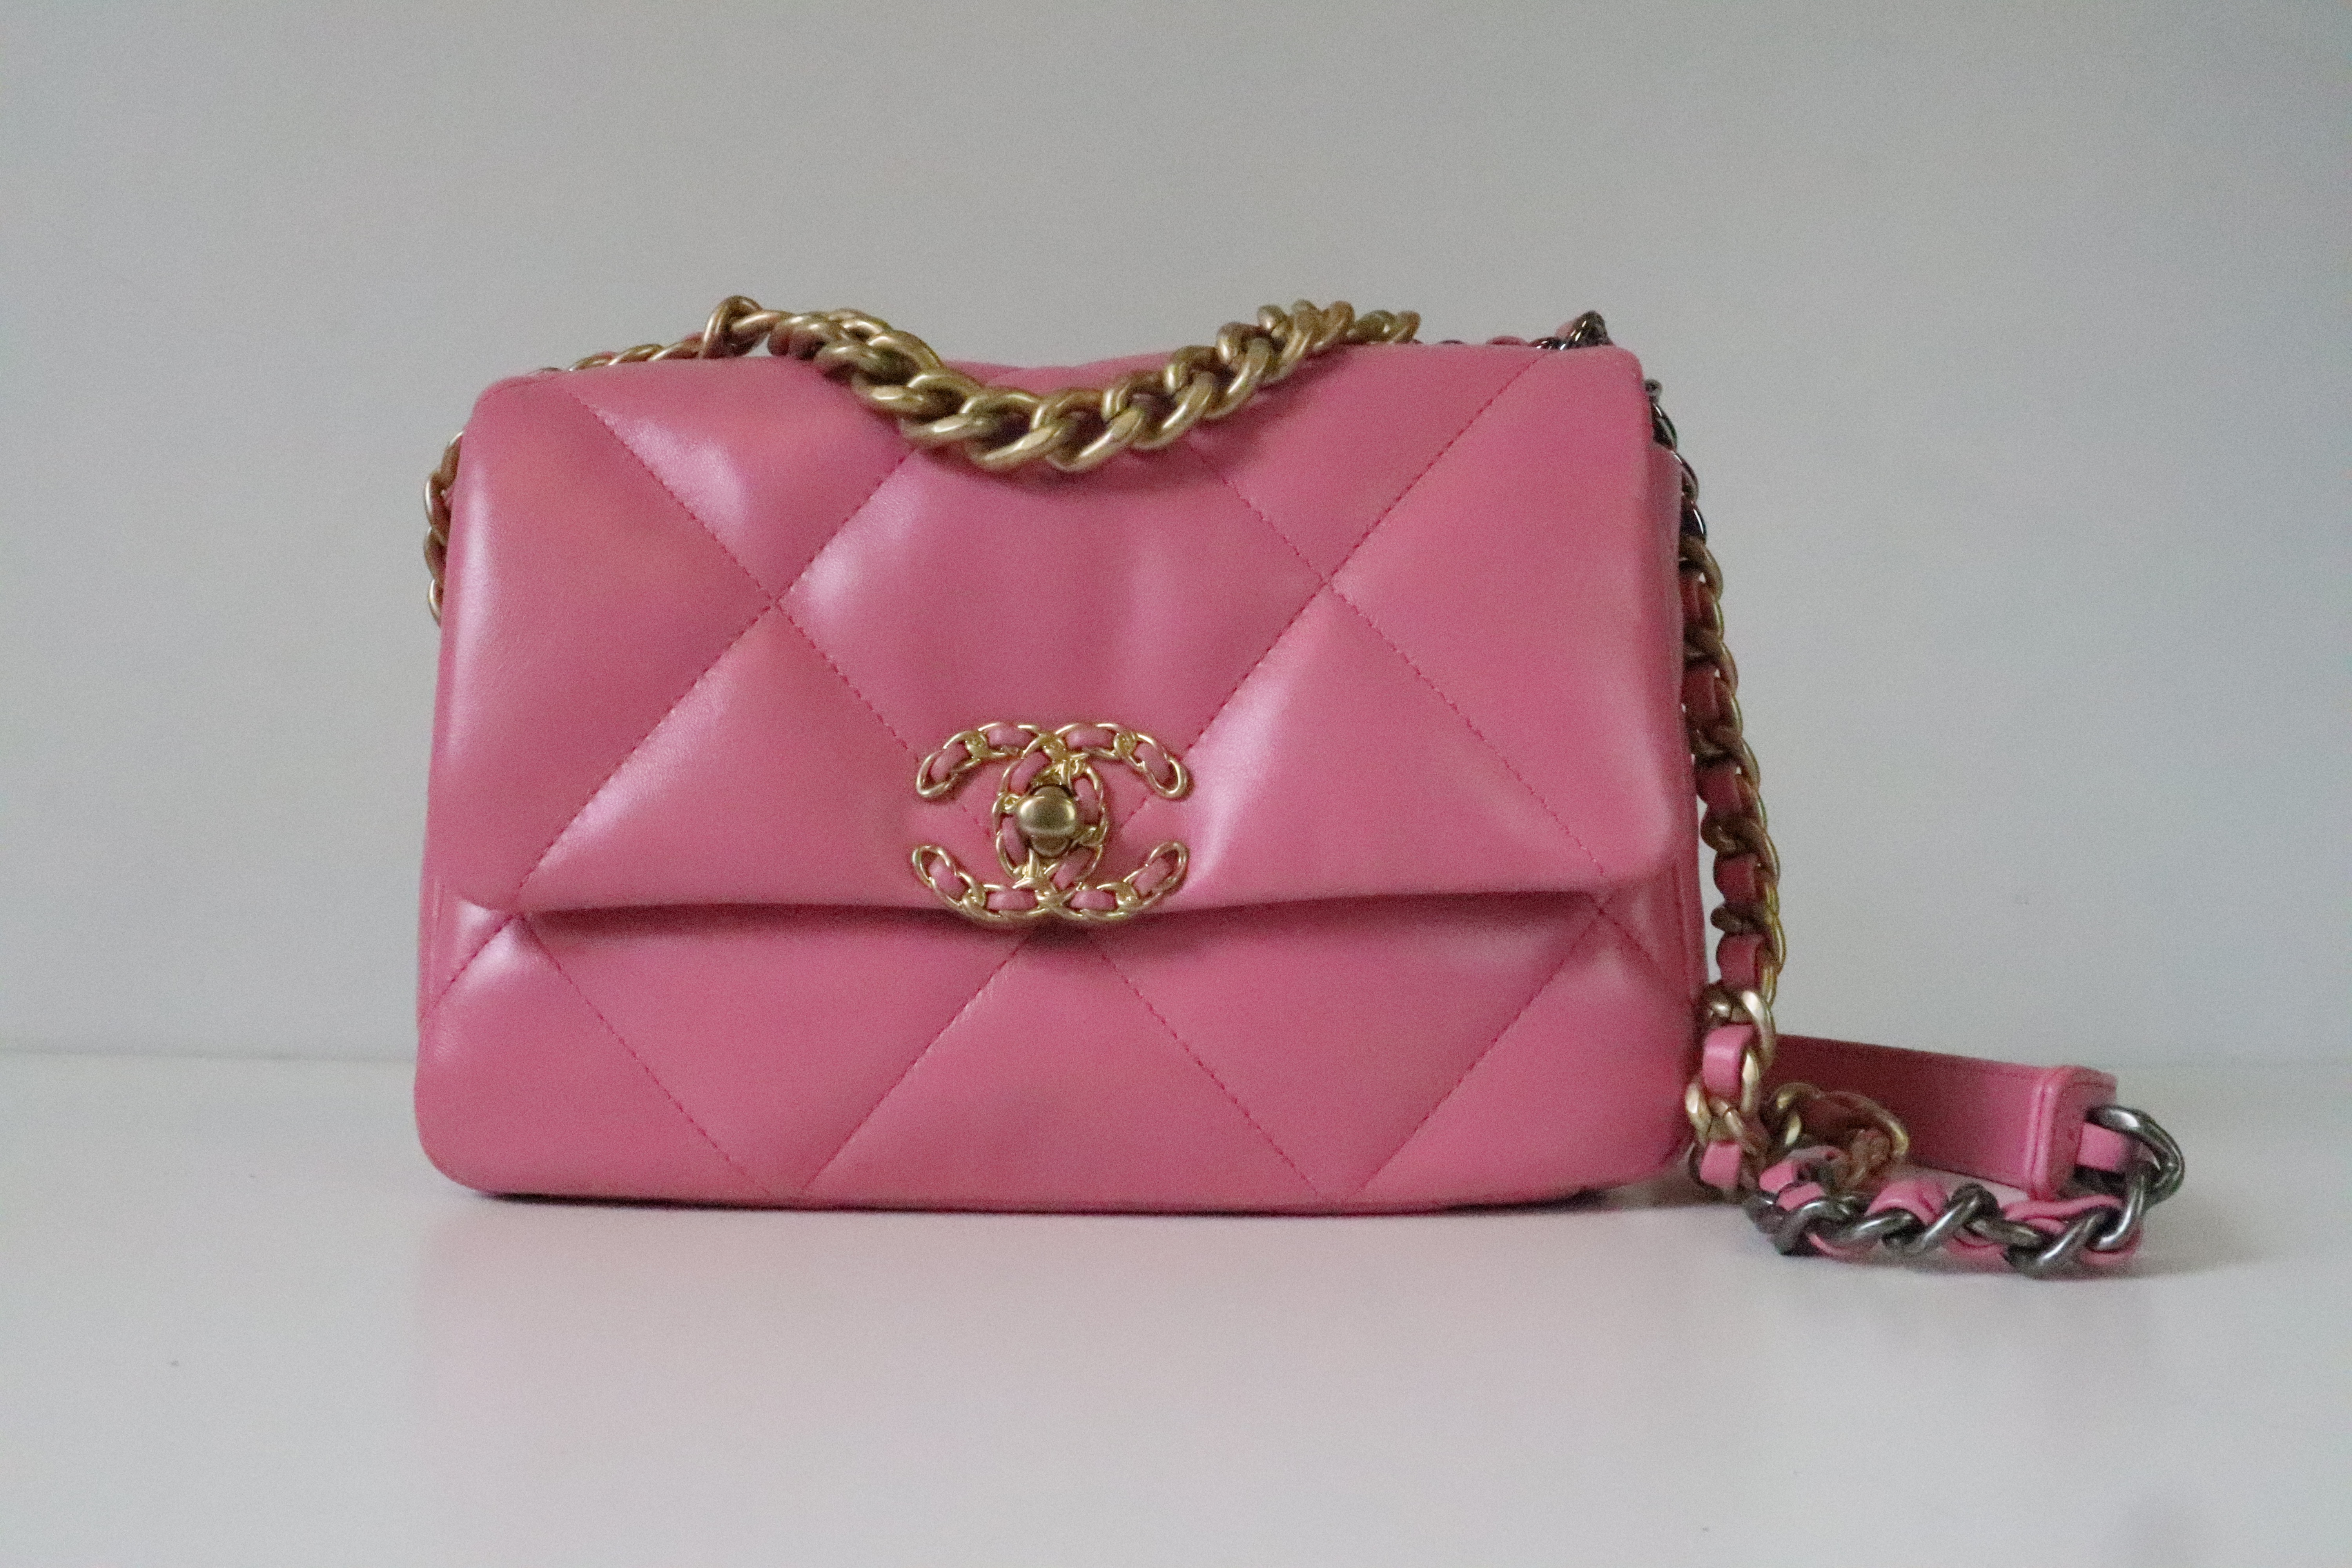 Chanel 19 Small, 21S Pink, New in Box - Julia Rose Boston